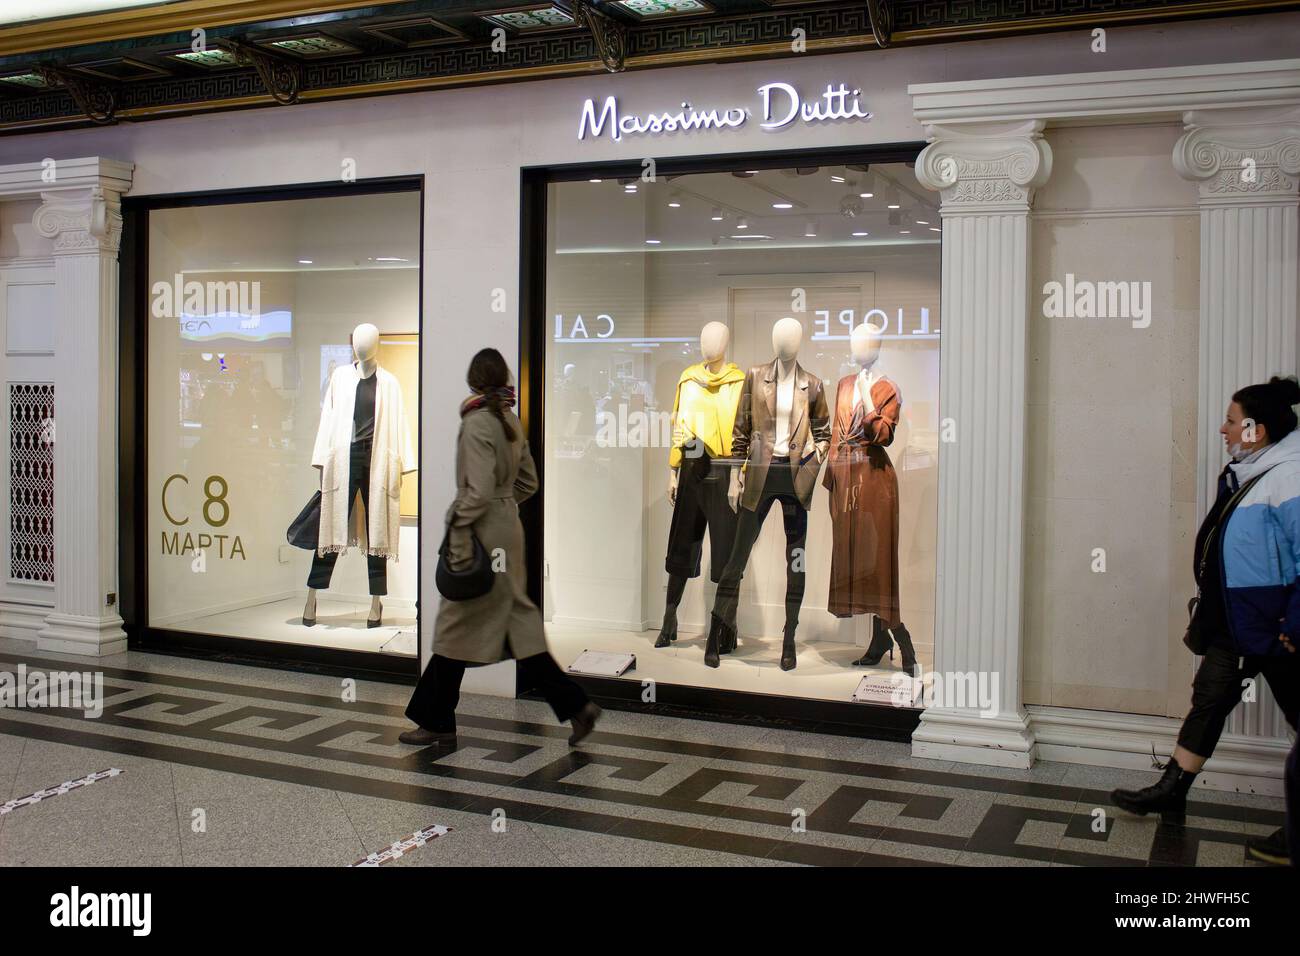 Massimo dutti boutique -Fotos und -Bildmaterial in hoher Auflösung – Alamy